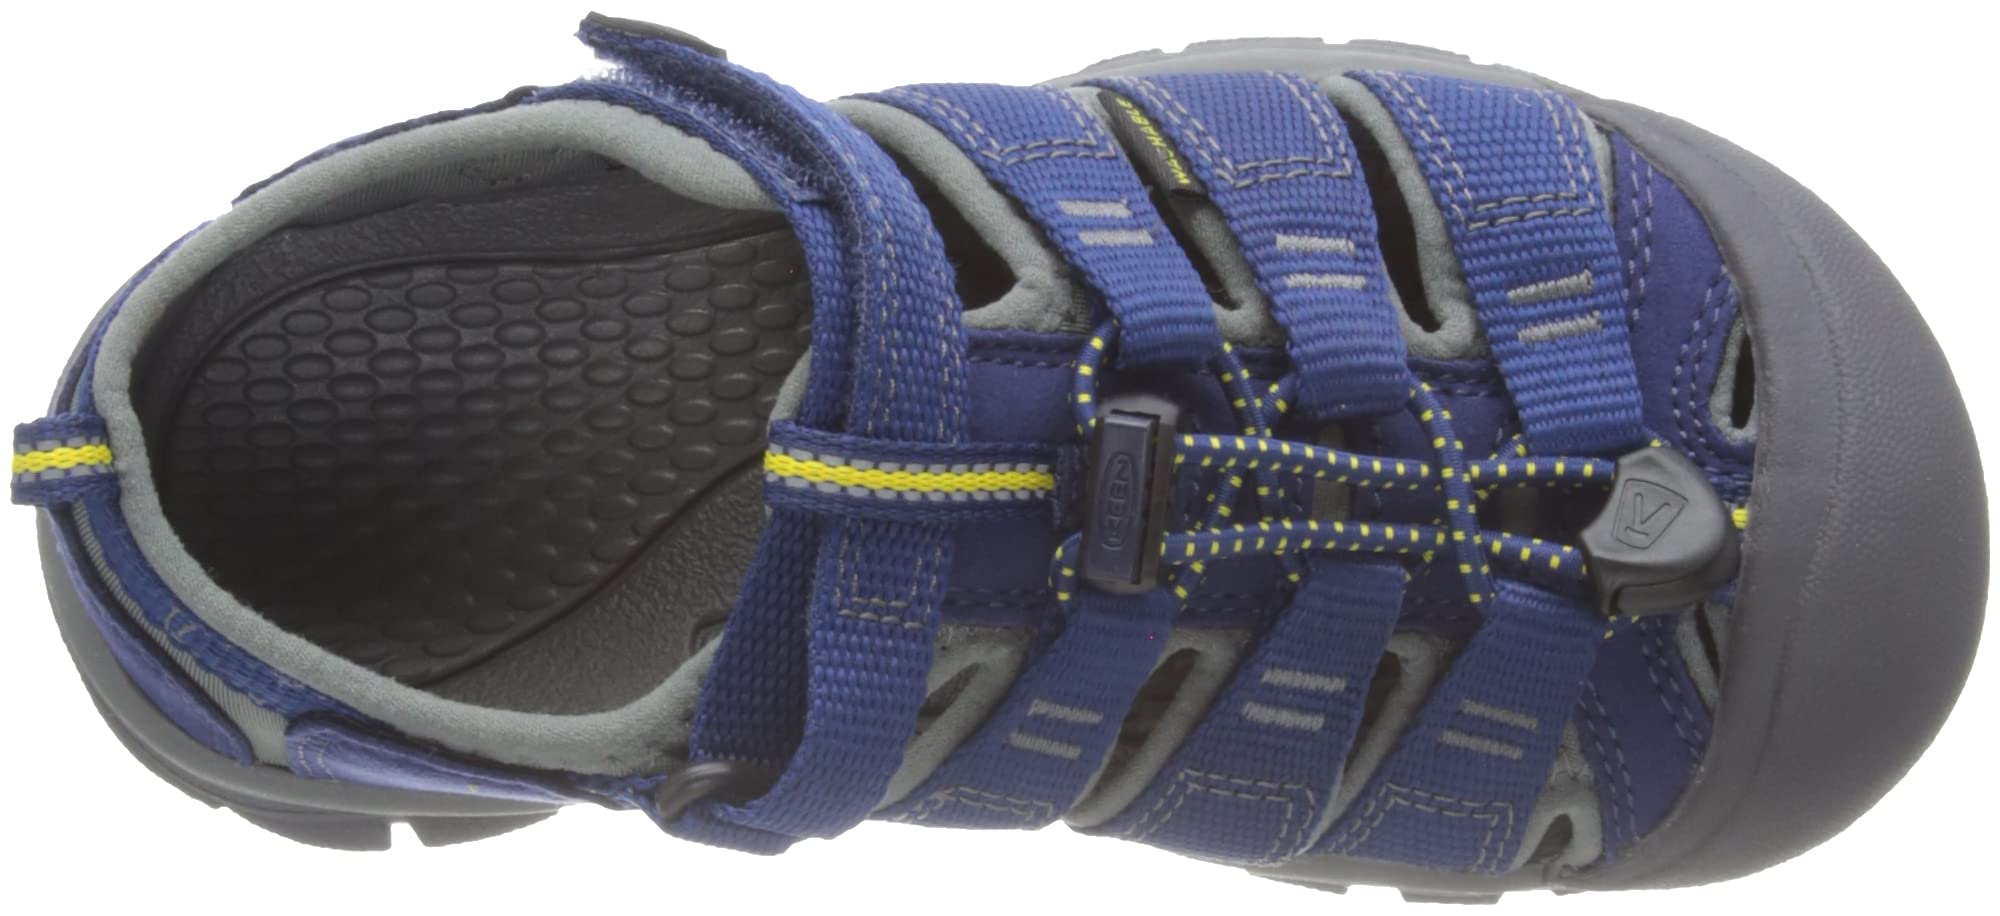 KEEN Unisex-Child Newport H2 Closed Toe Water Sandals, Blue Depths/Gargoyle, 6 Toddler US